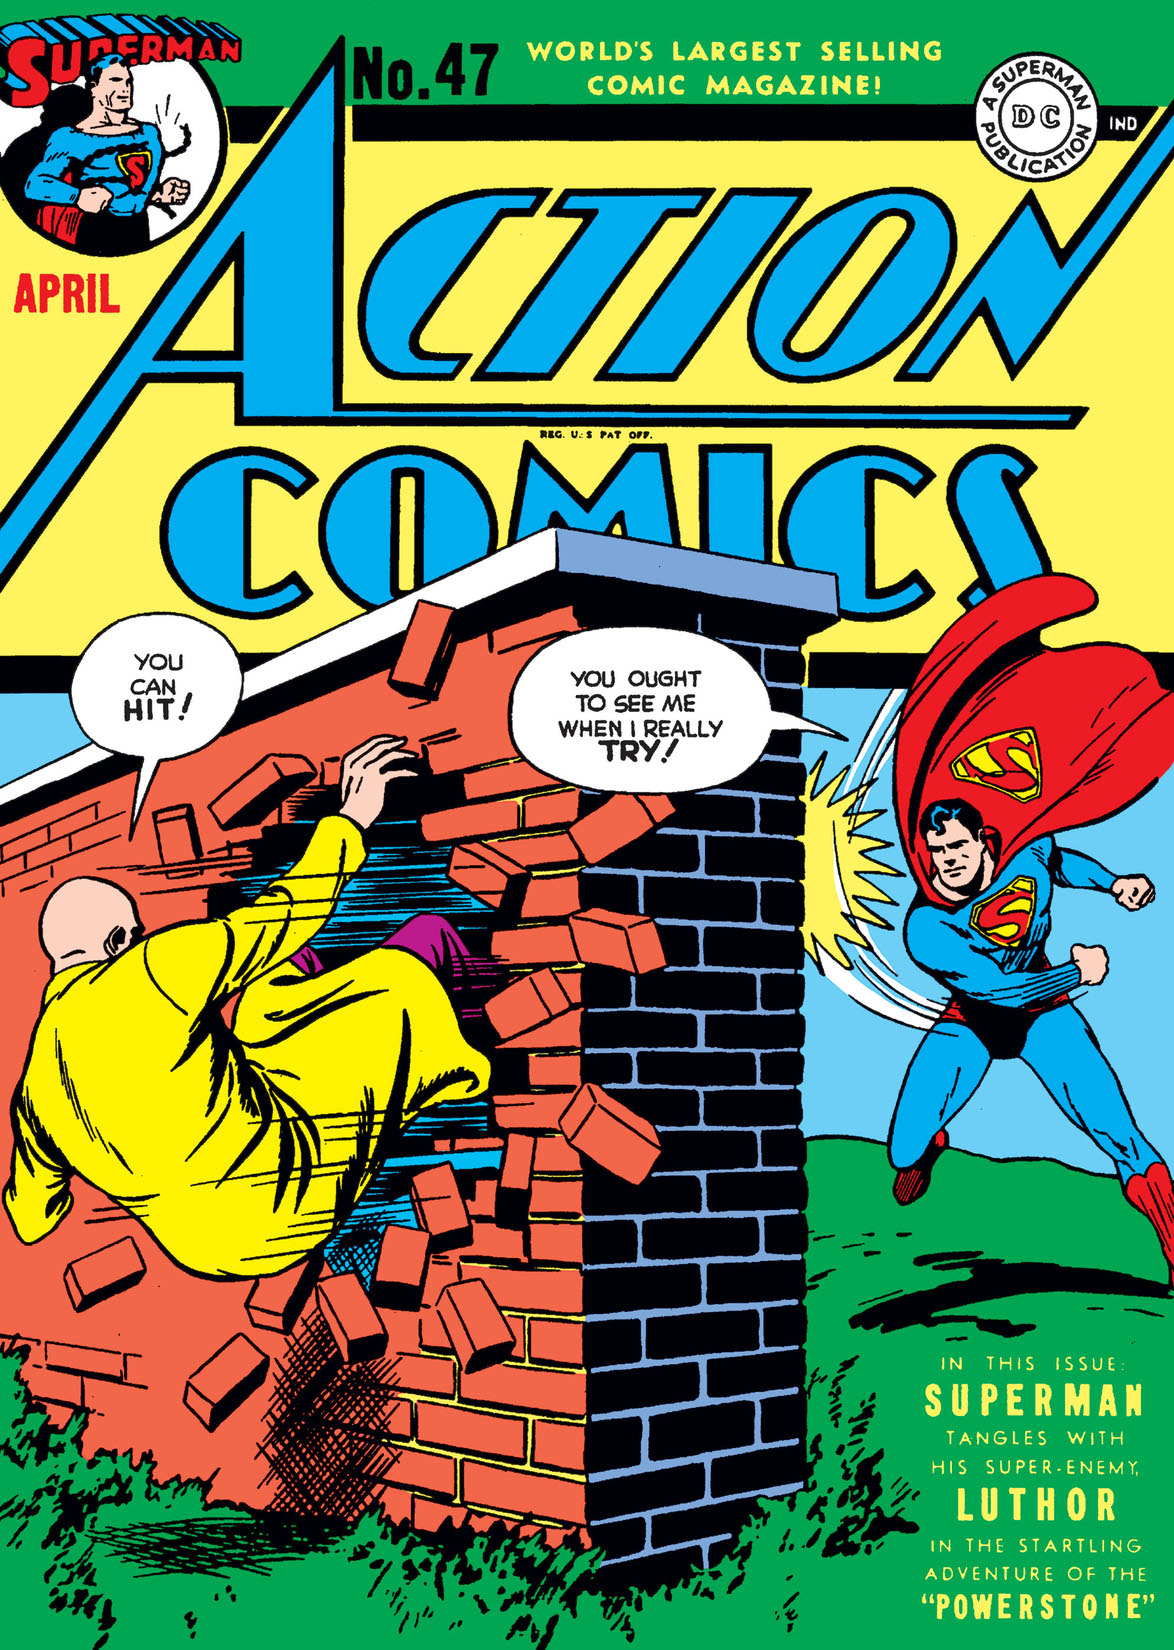 Action Comics (1938-) #47 preview images